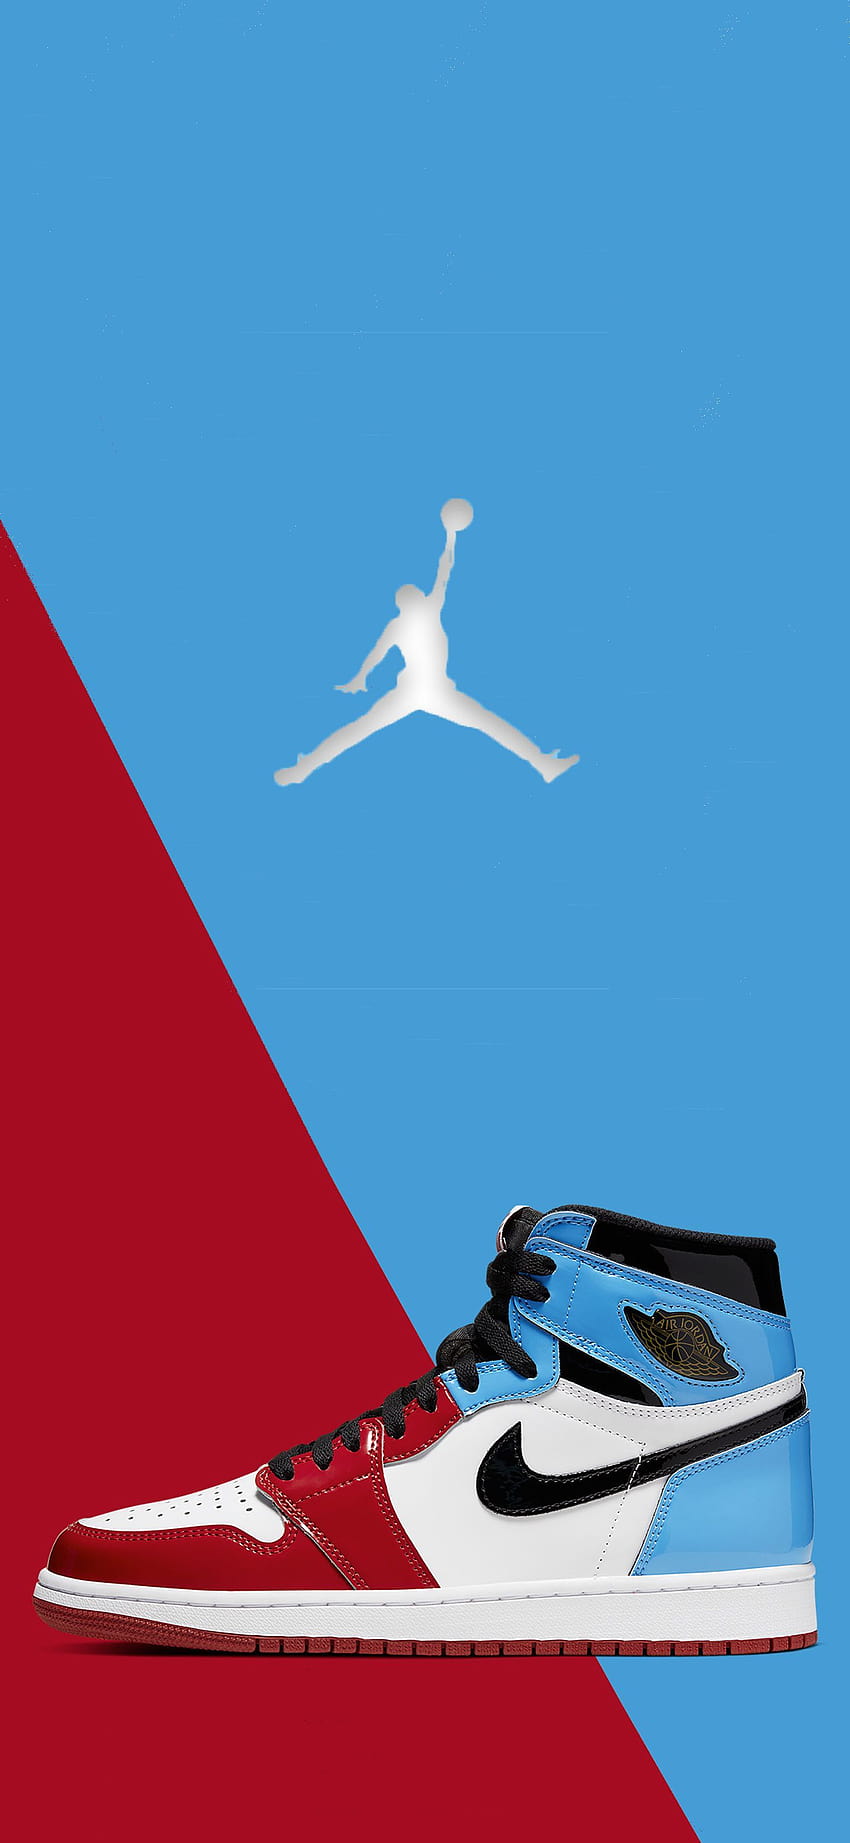 Nike Air Jordan 1 Wallpapers  Top Free Nike Air Jordan 1 Backgrounds   WallpaperAccess